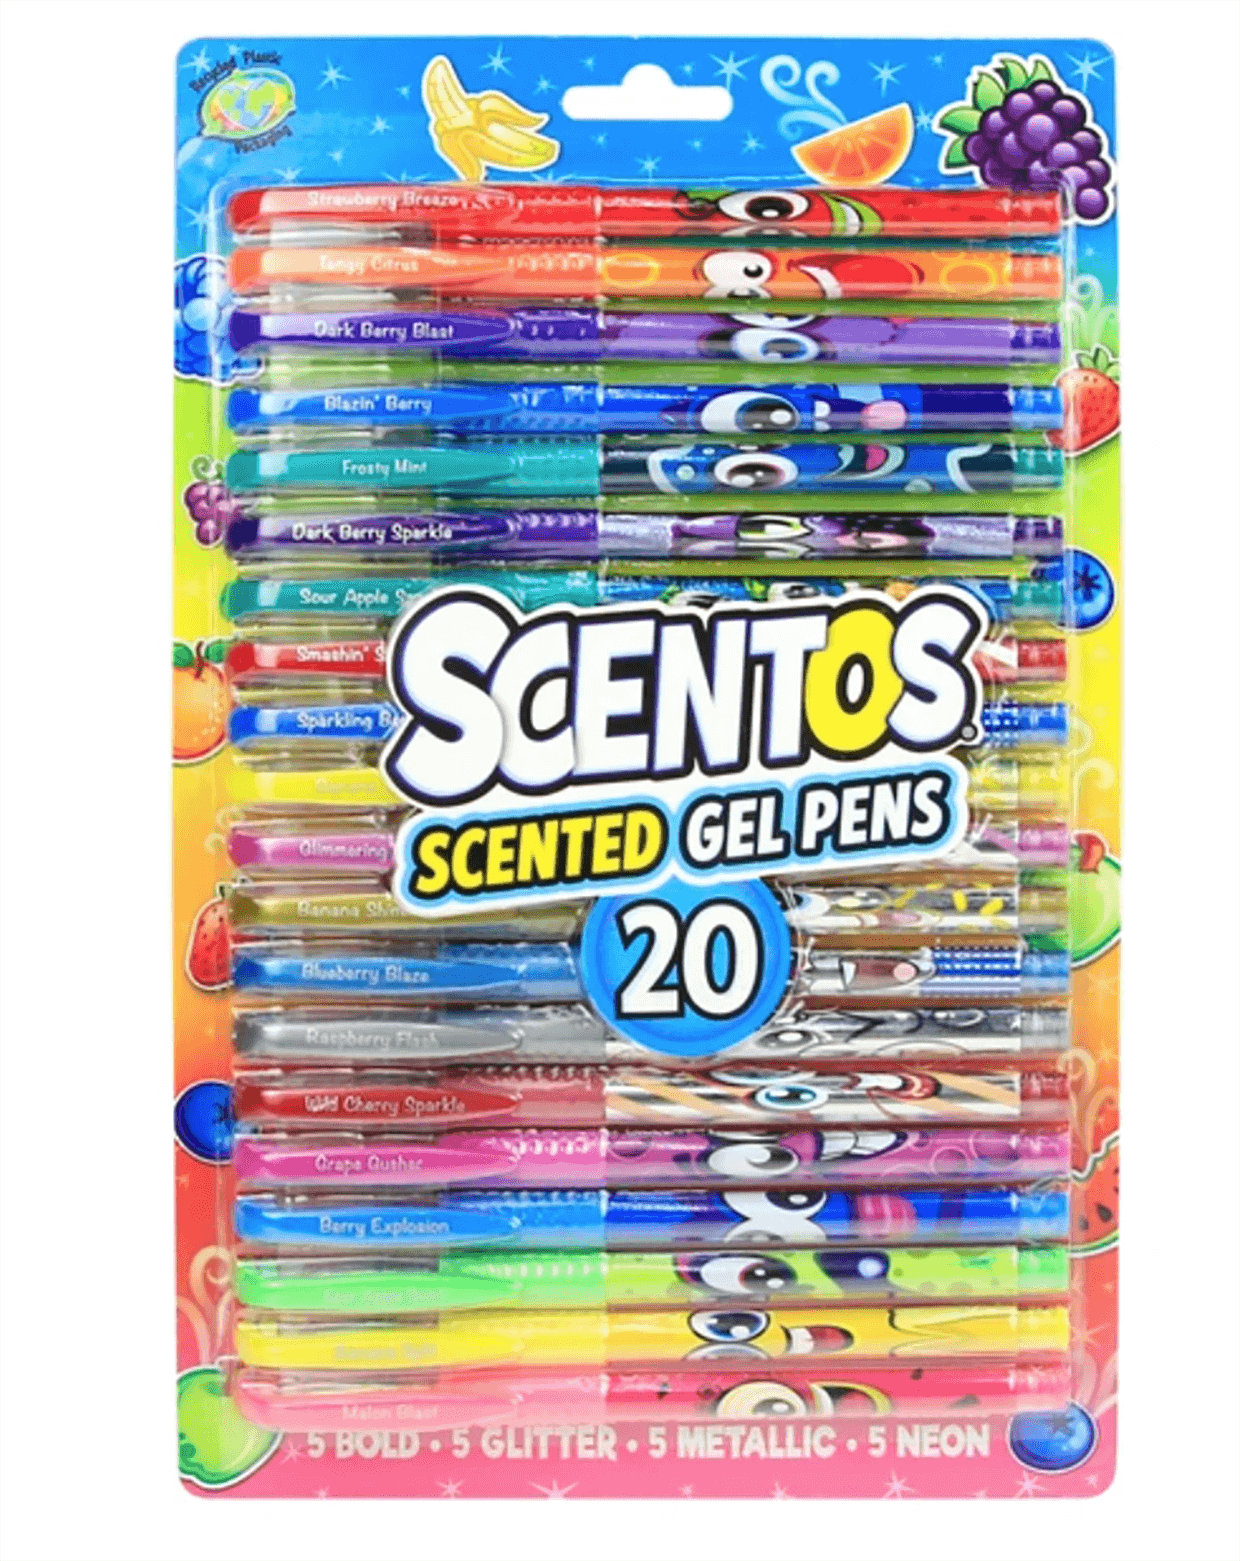 Scentos Scented Glitter Gel Pens 8 Count Set